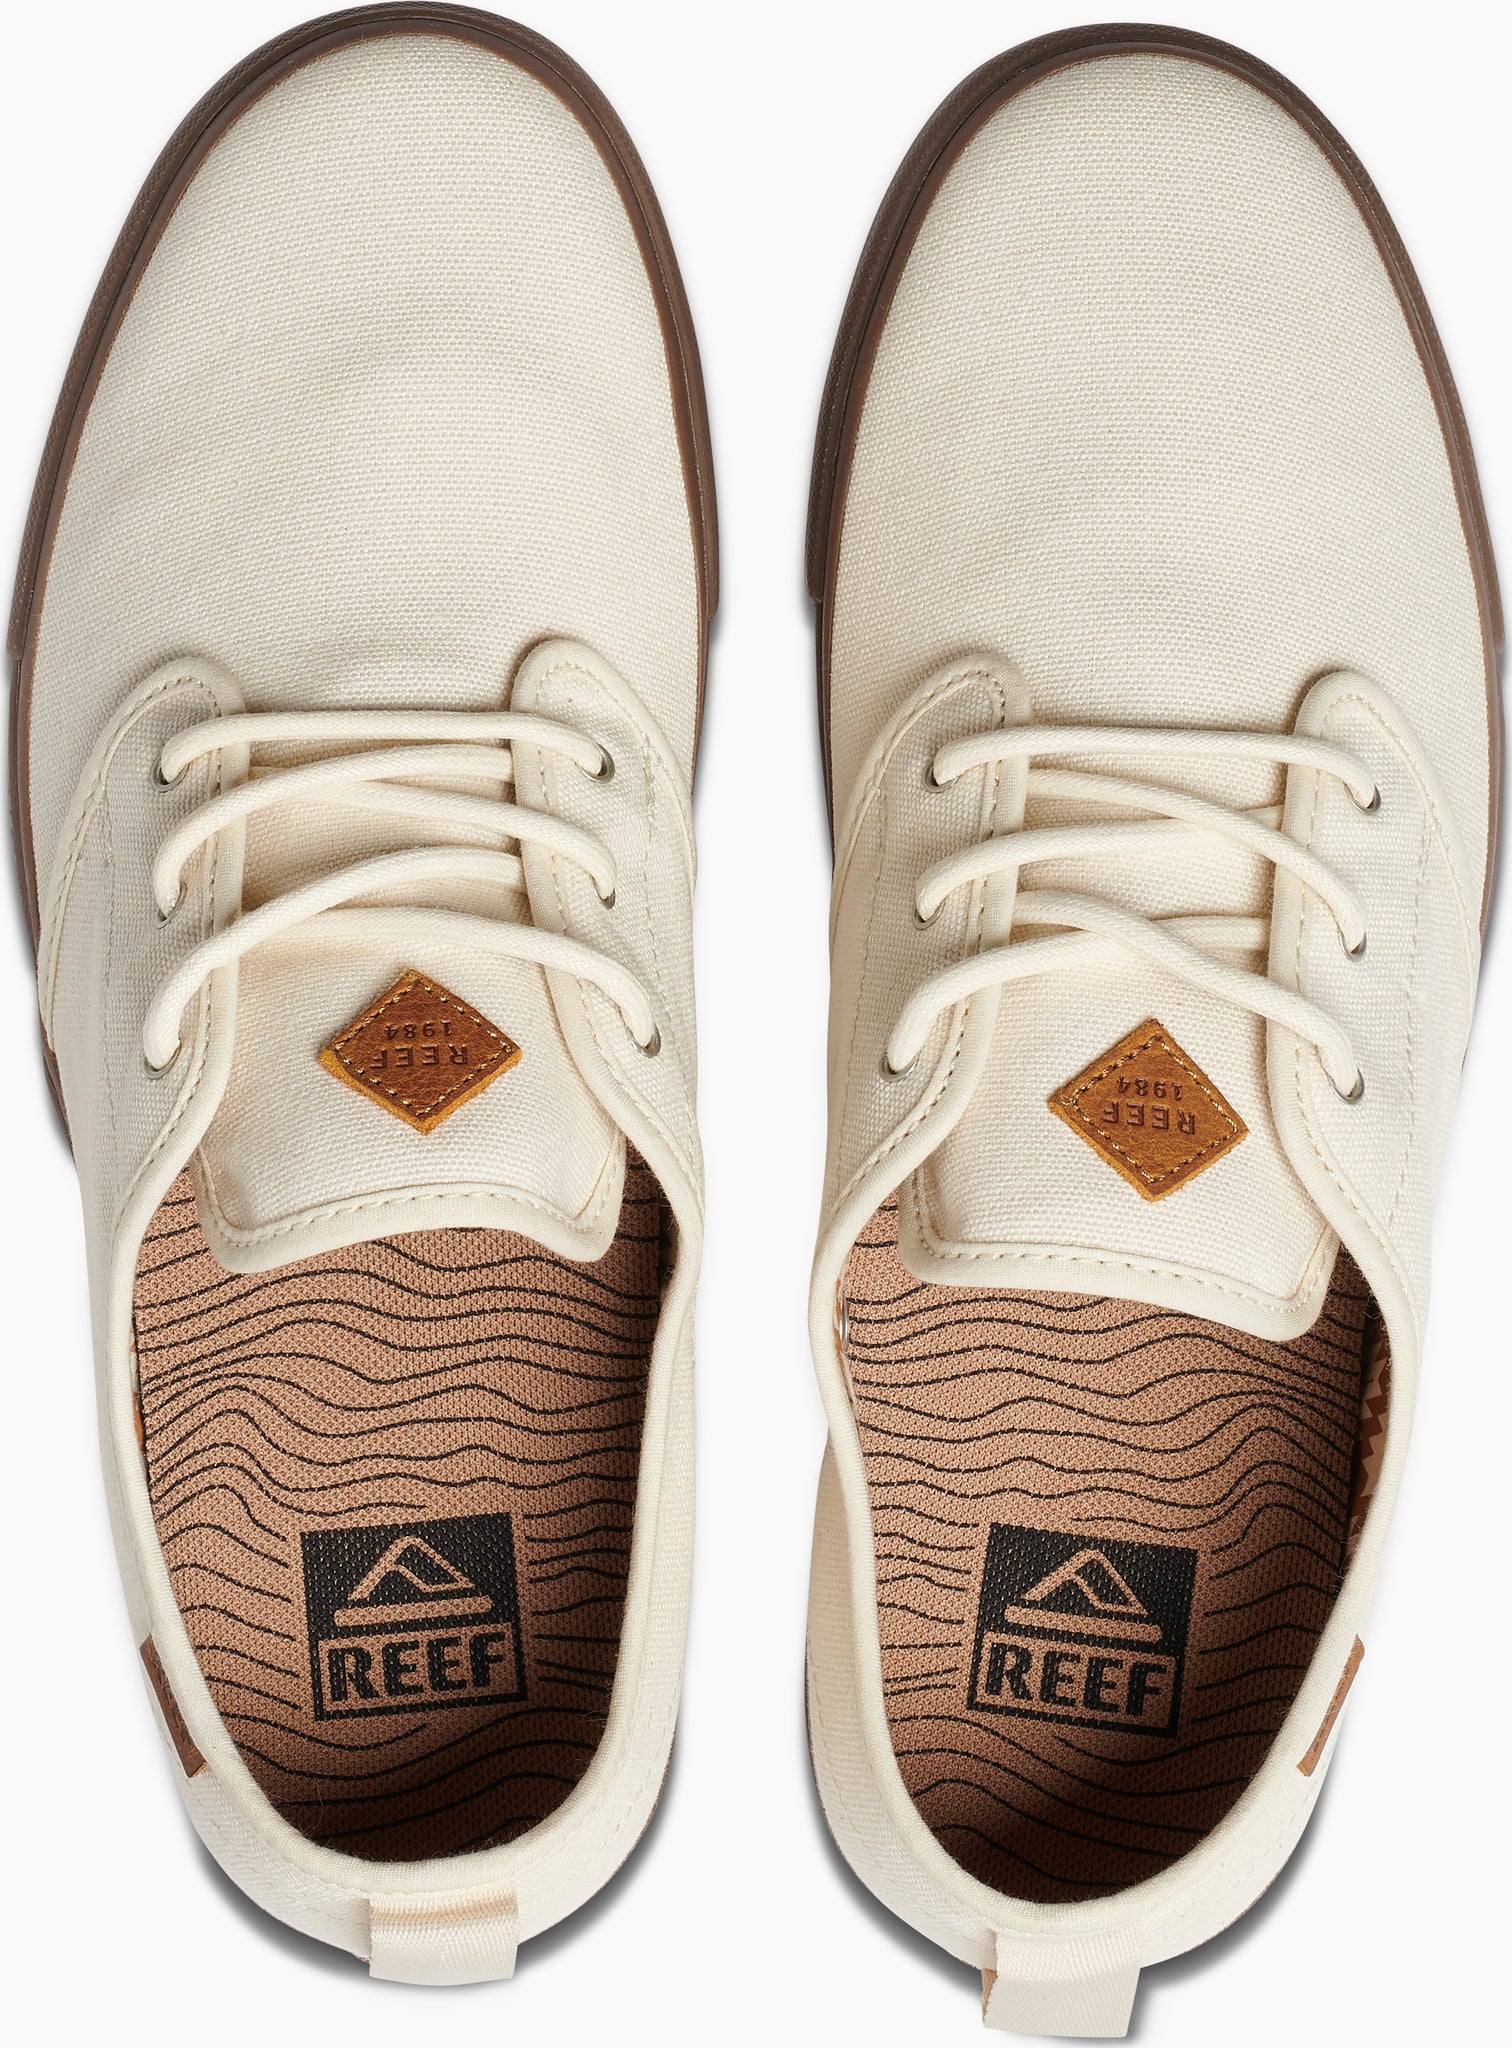 Reef Reef Landis 2 Shoes - Men's | The 